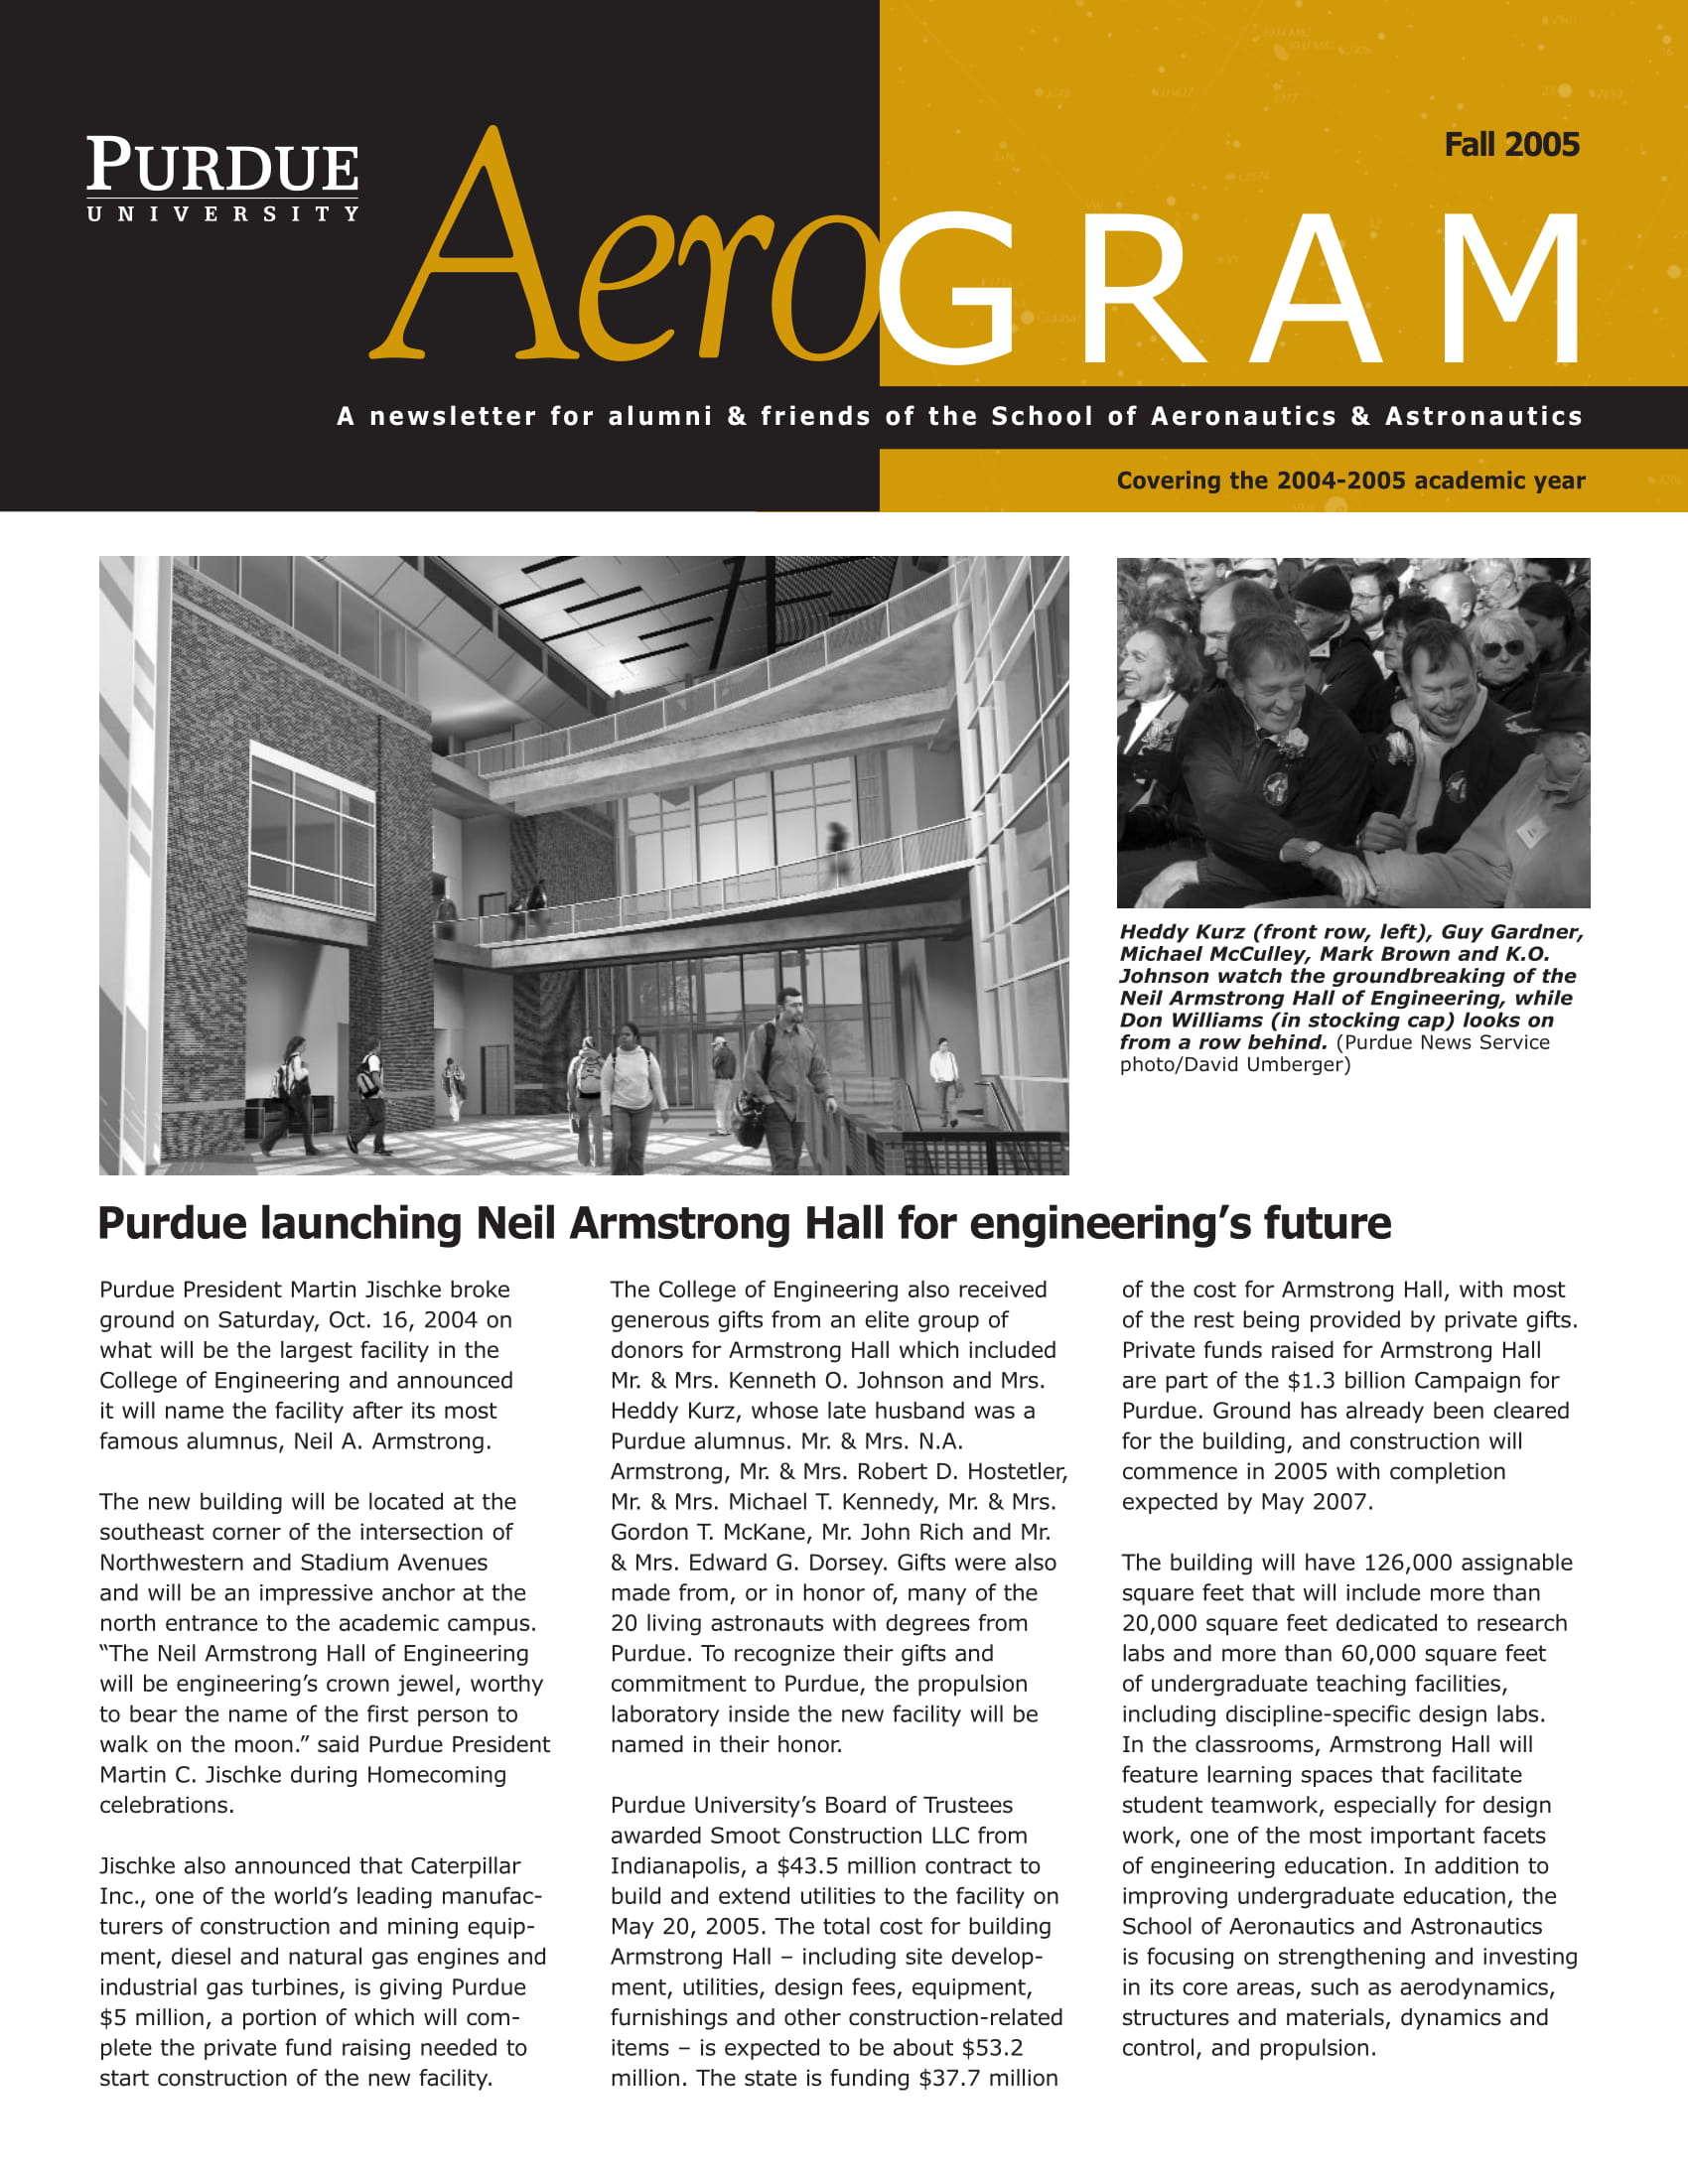 Aerogram magazine, Fall 2005